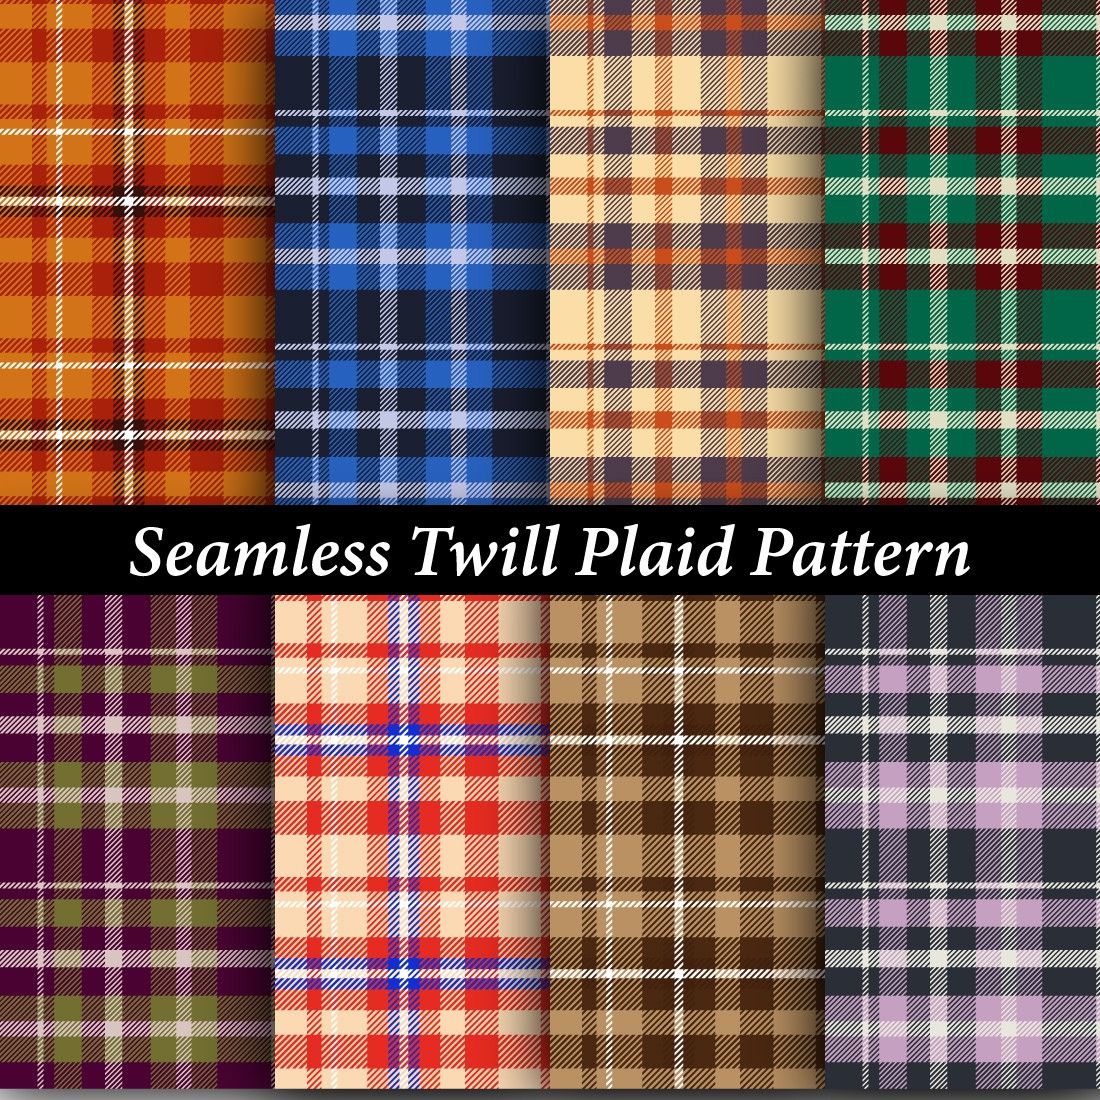 seamless twill plaid pattern, bundle of 8 pattern cover image.